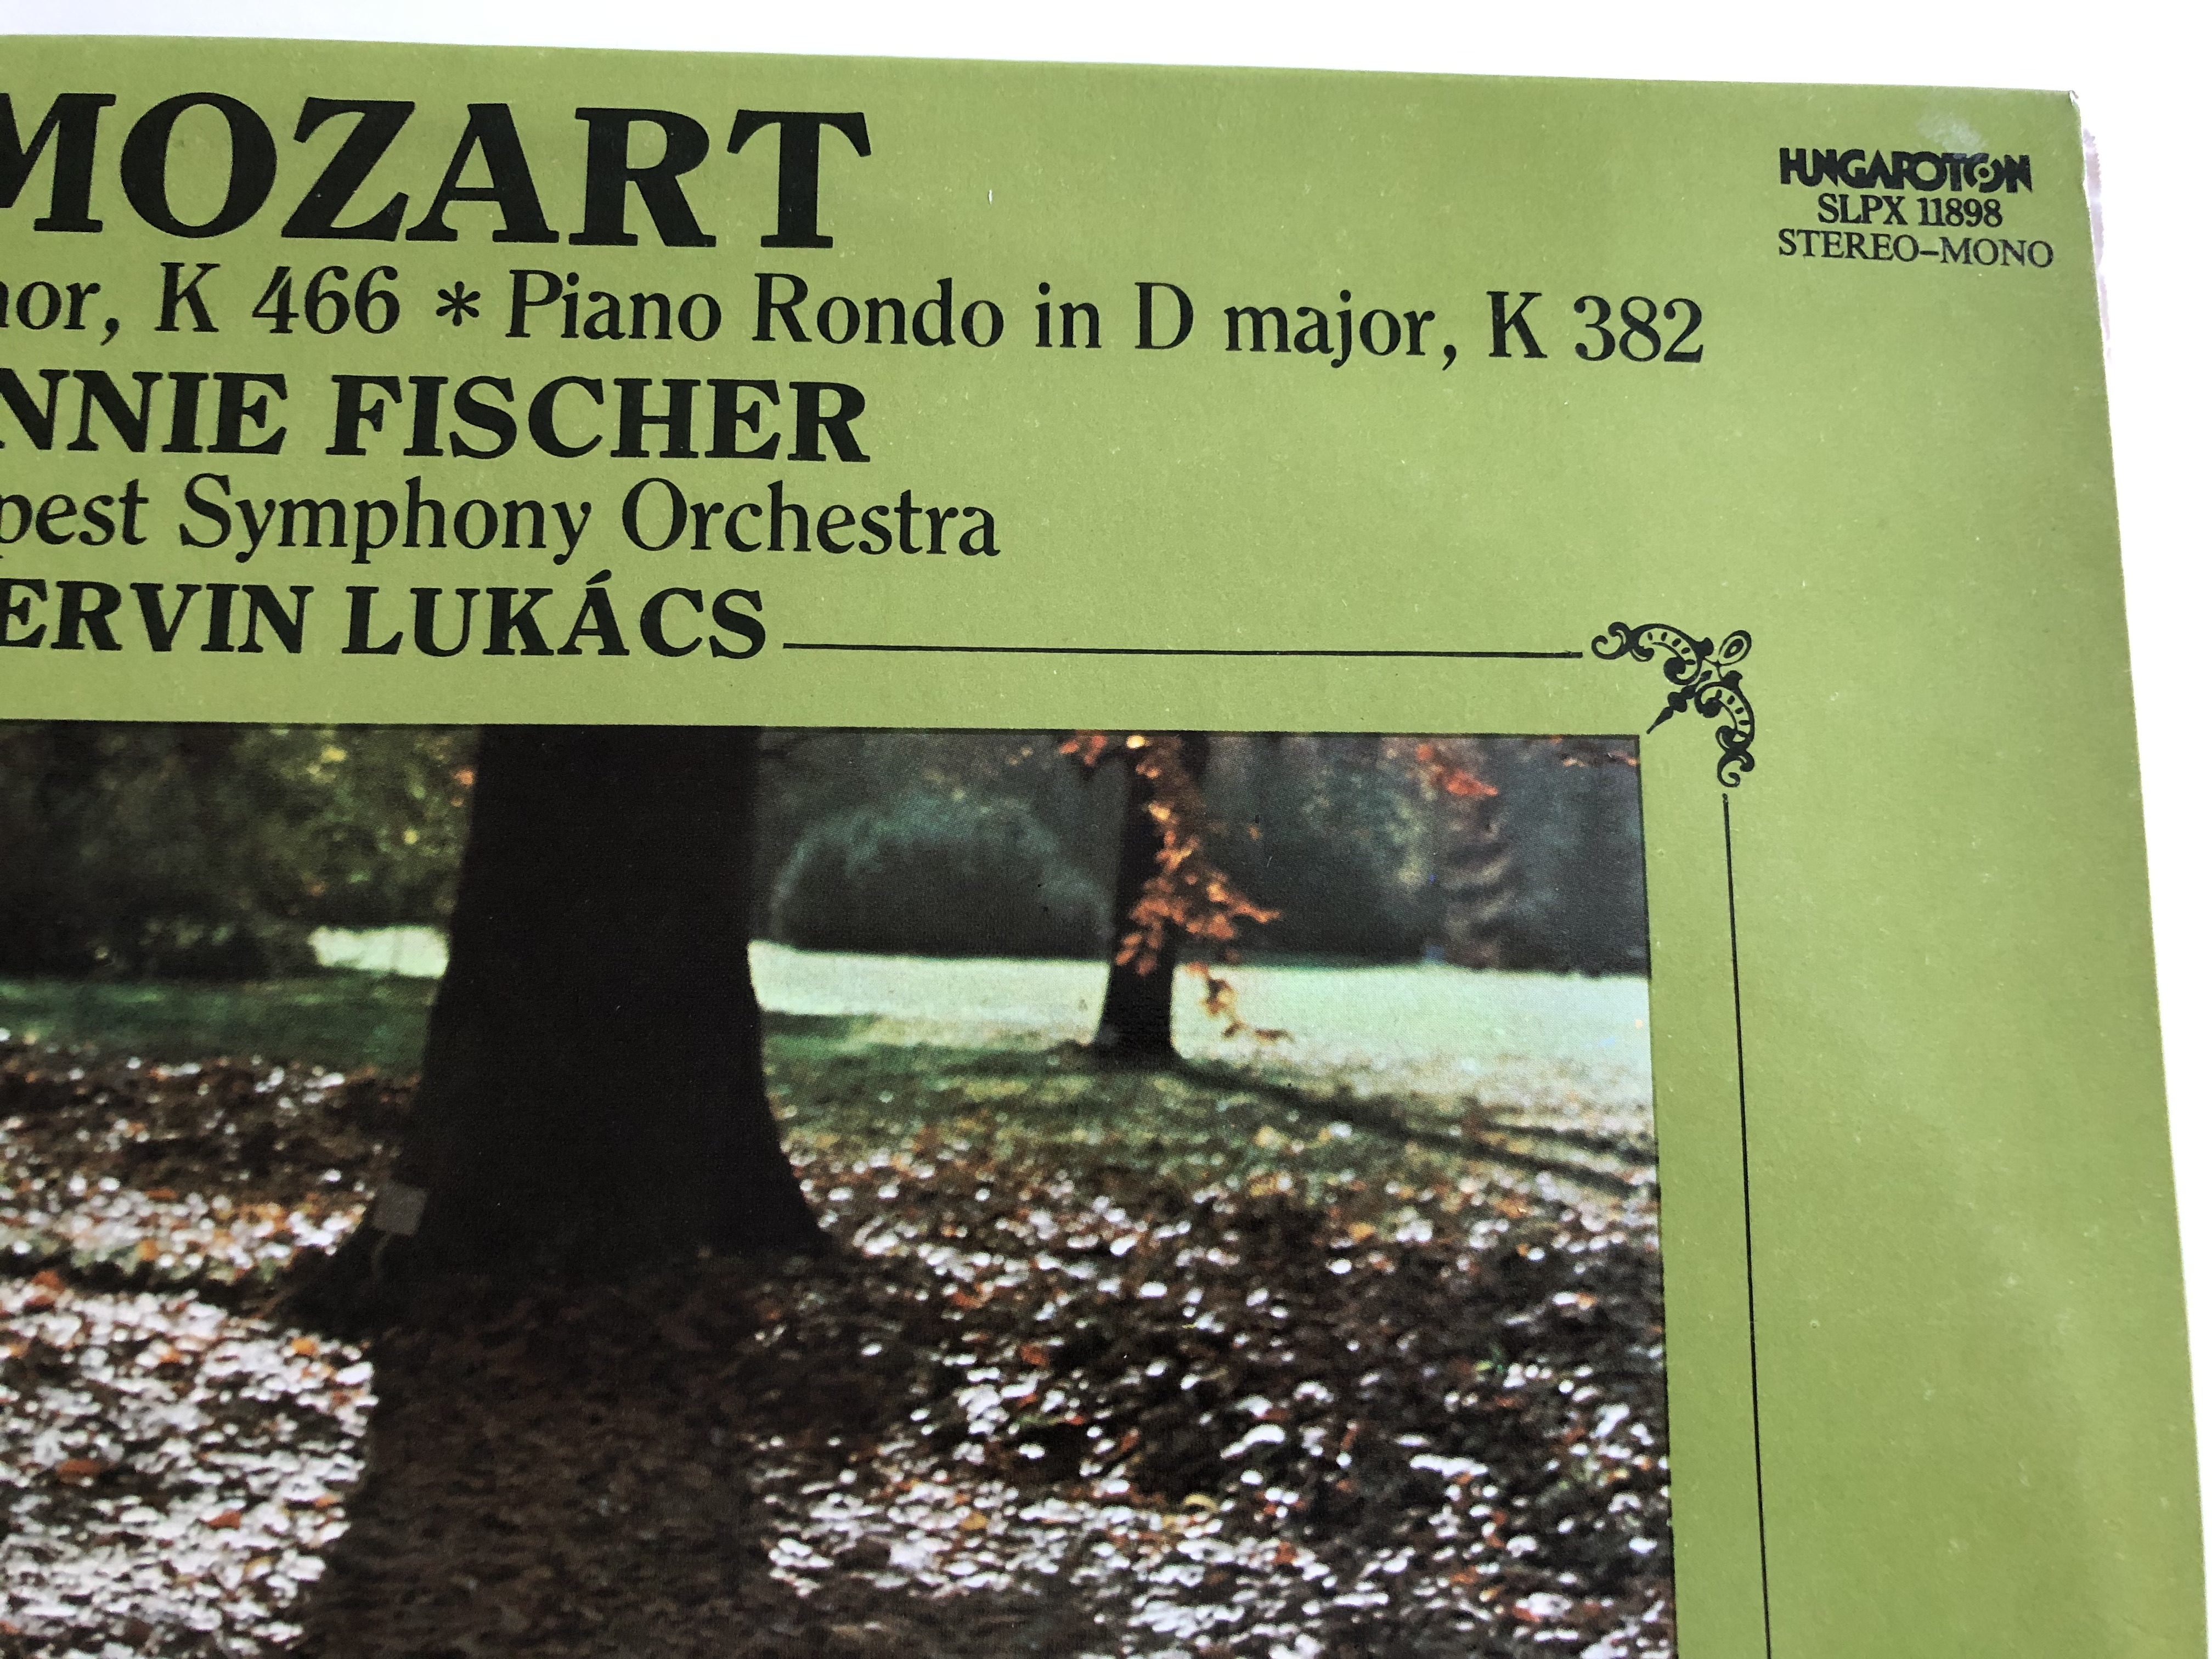 mozart-piano-concerto-in-d-minor-k-466-piano-rondo-in-d-major-k-382-annie-fischer-budapest-symphony-orchestra-ervin-lukacs-hungaroton-lp-stereo-mono-slpx-11898-2-.jpg